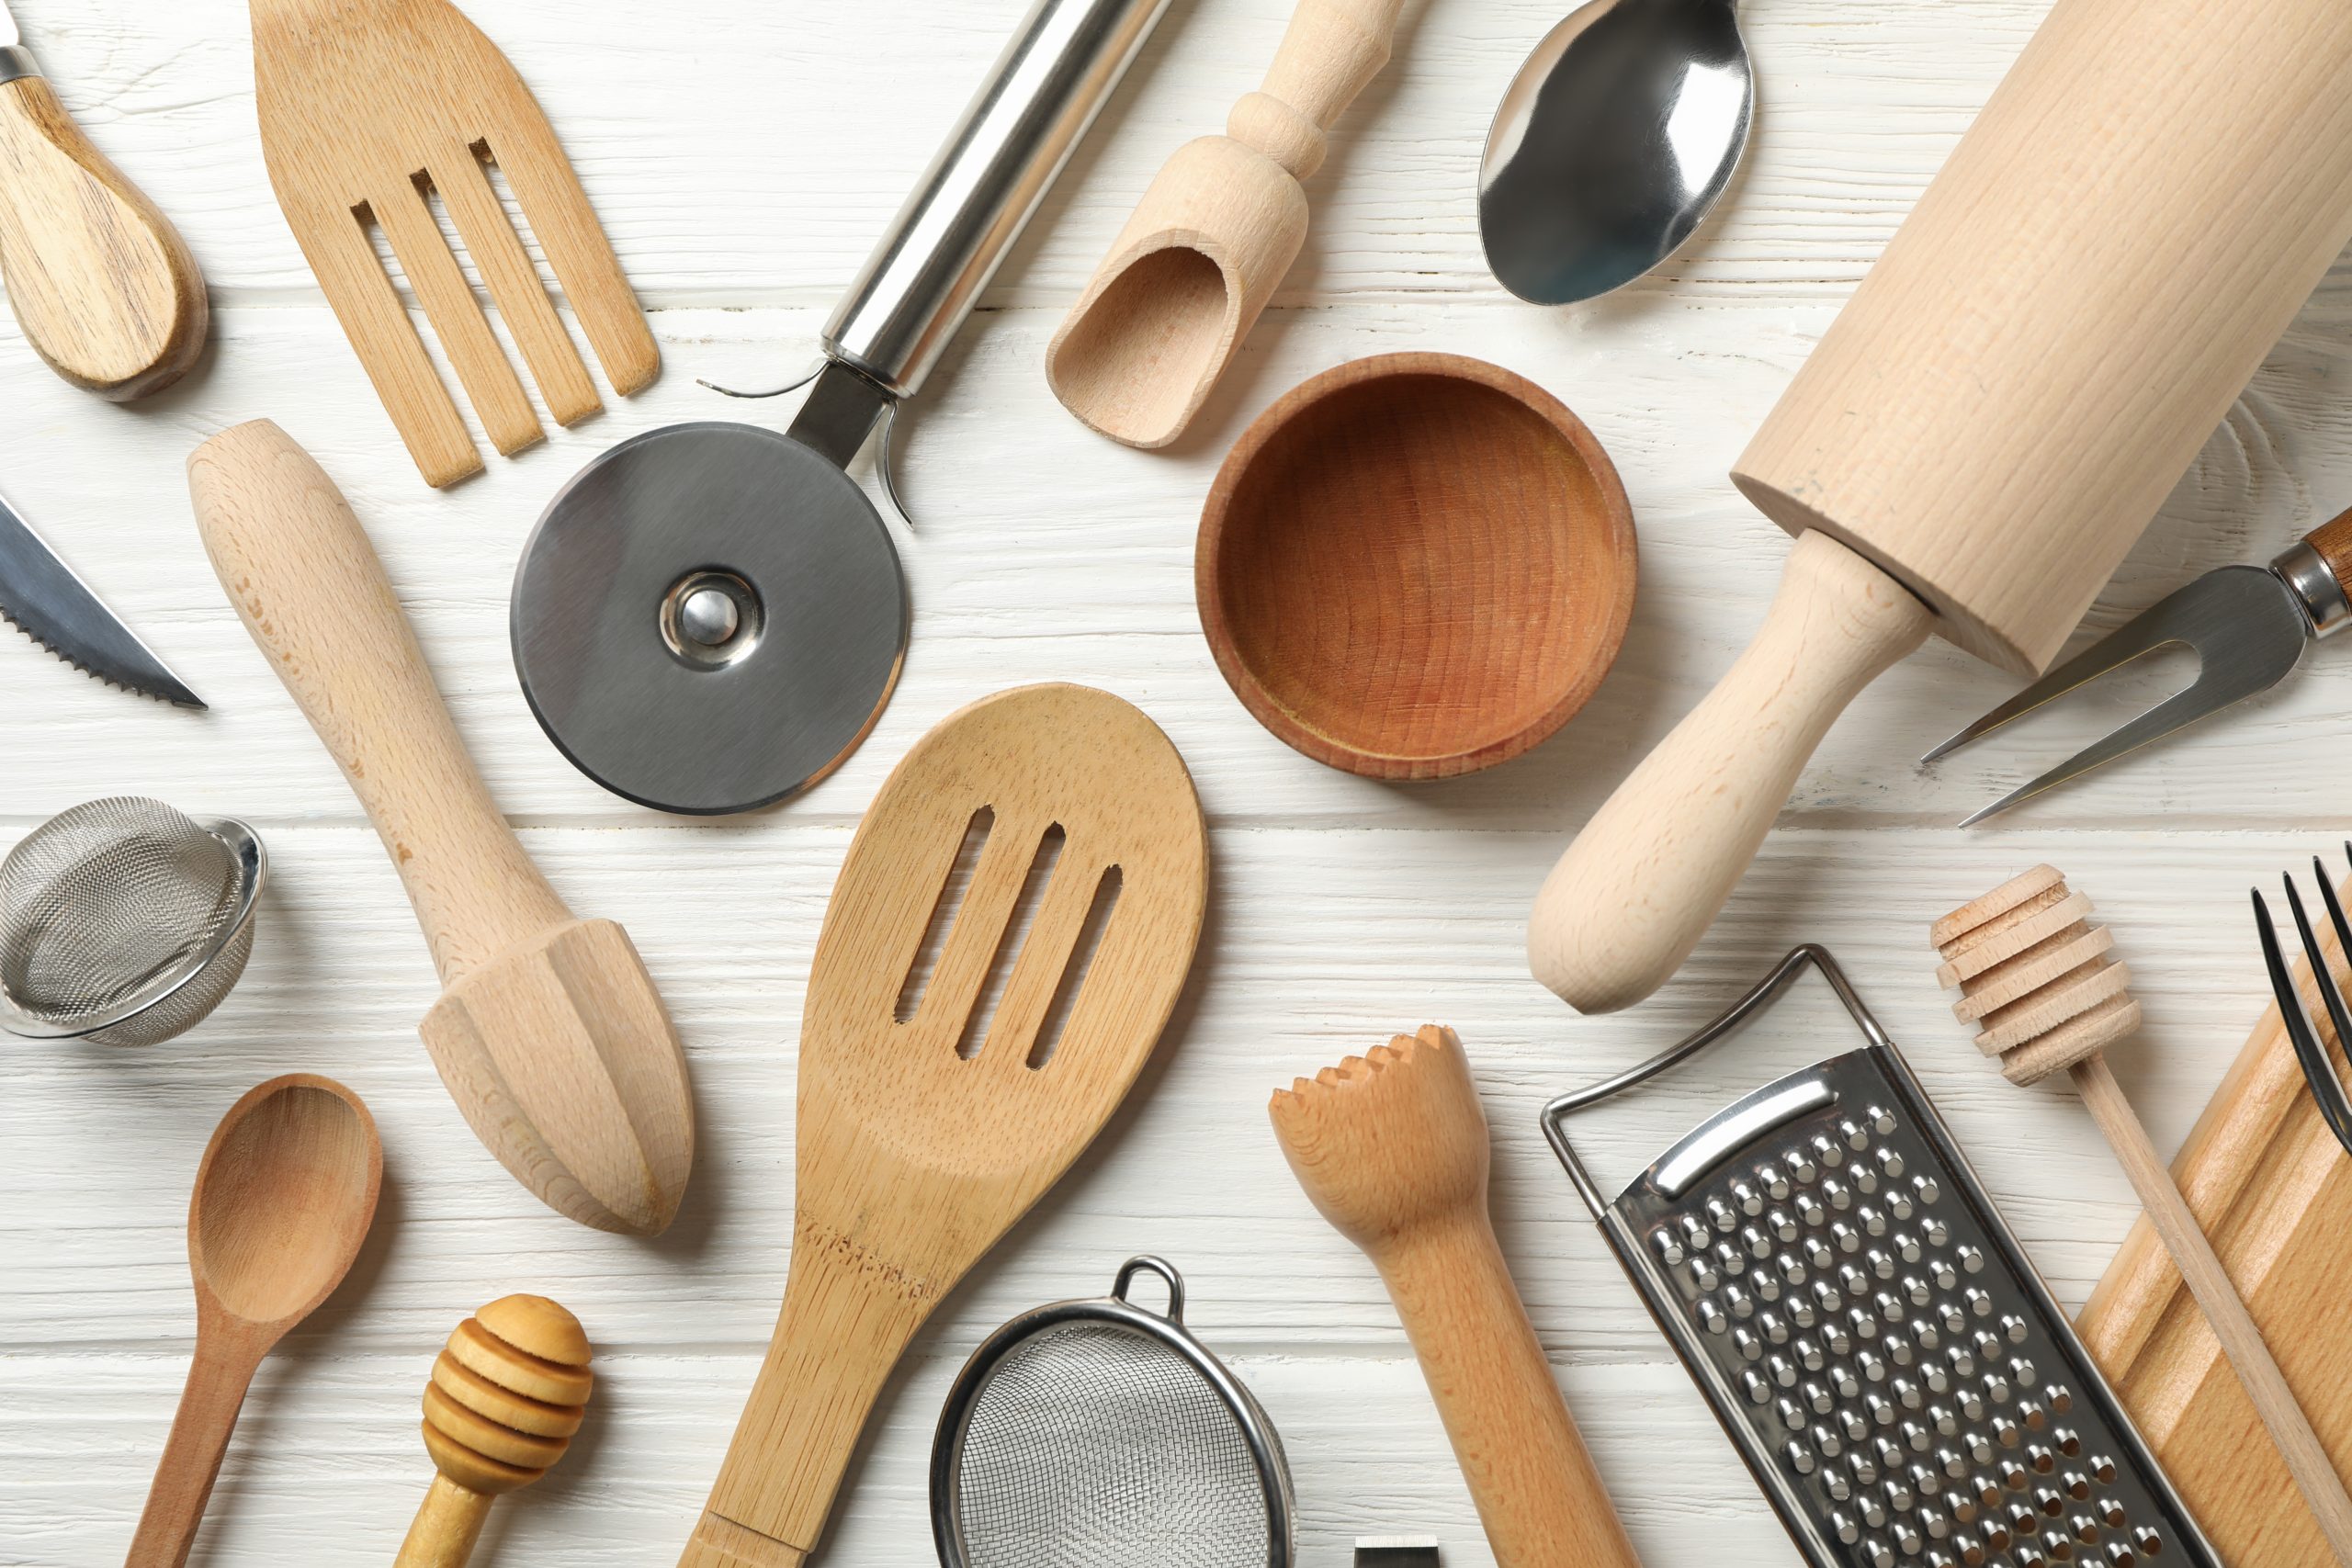 Different kitchen cutlery on white wooden background